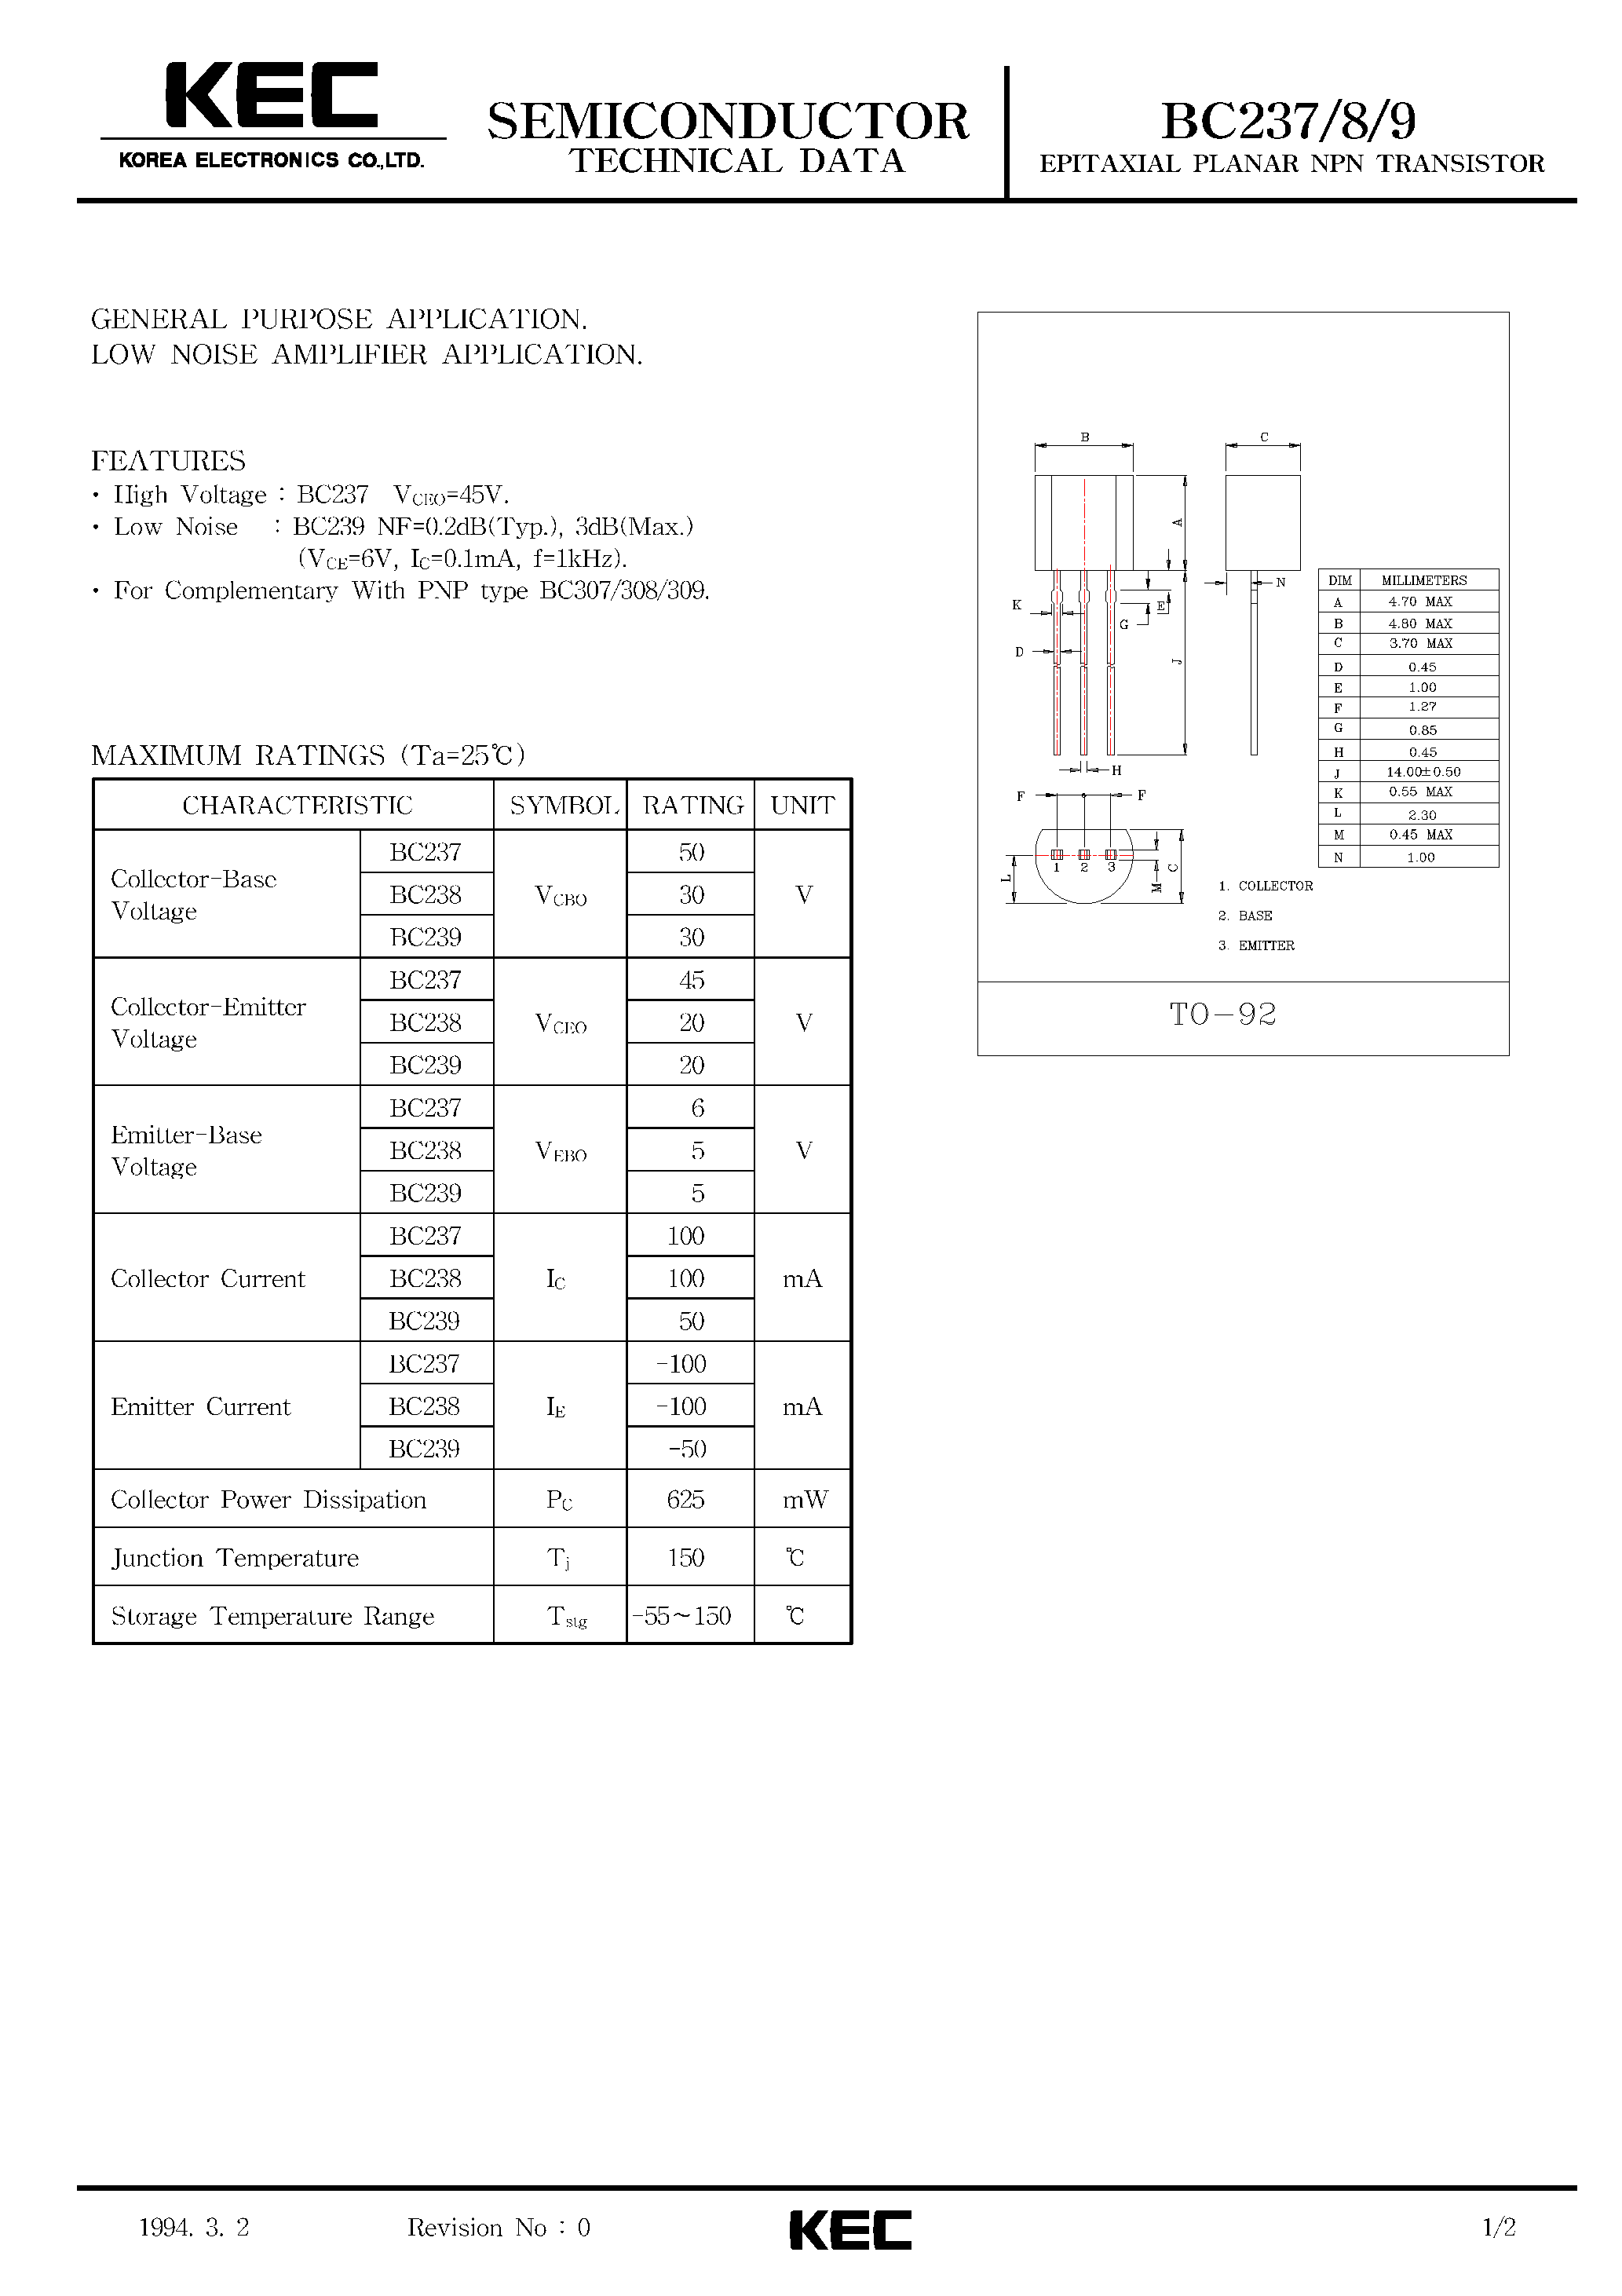 Datasheet BC239 - EPITAXIAL PLANAR NPN TRANSISTOR (GENERAL PURPOSE / LOW NOISE AMPLIFIER) page 1